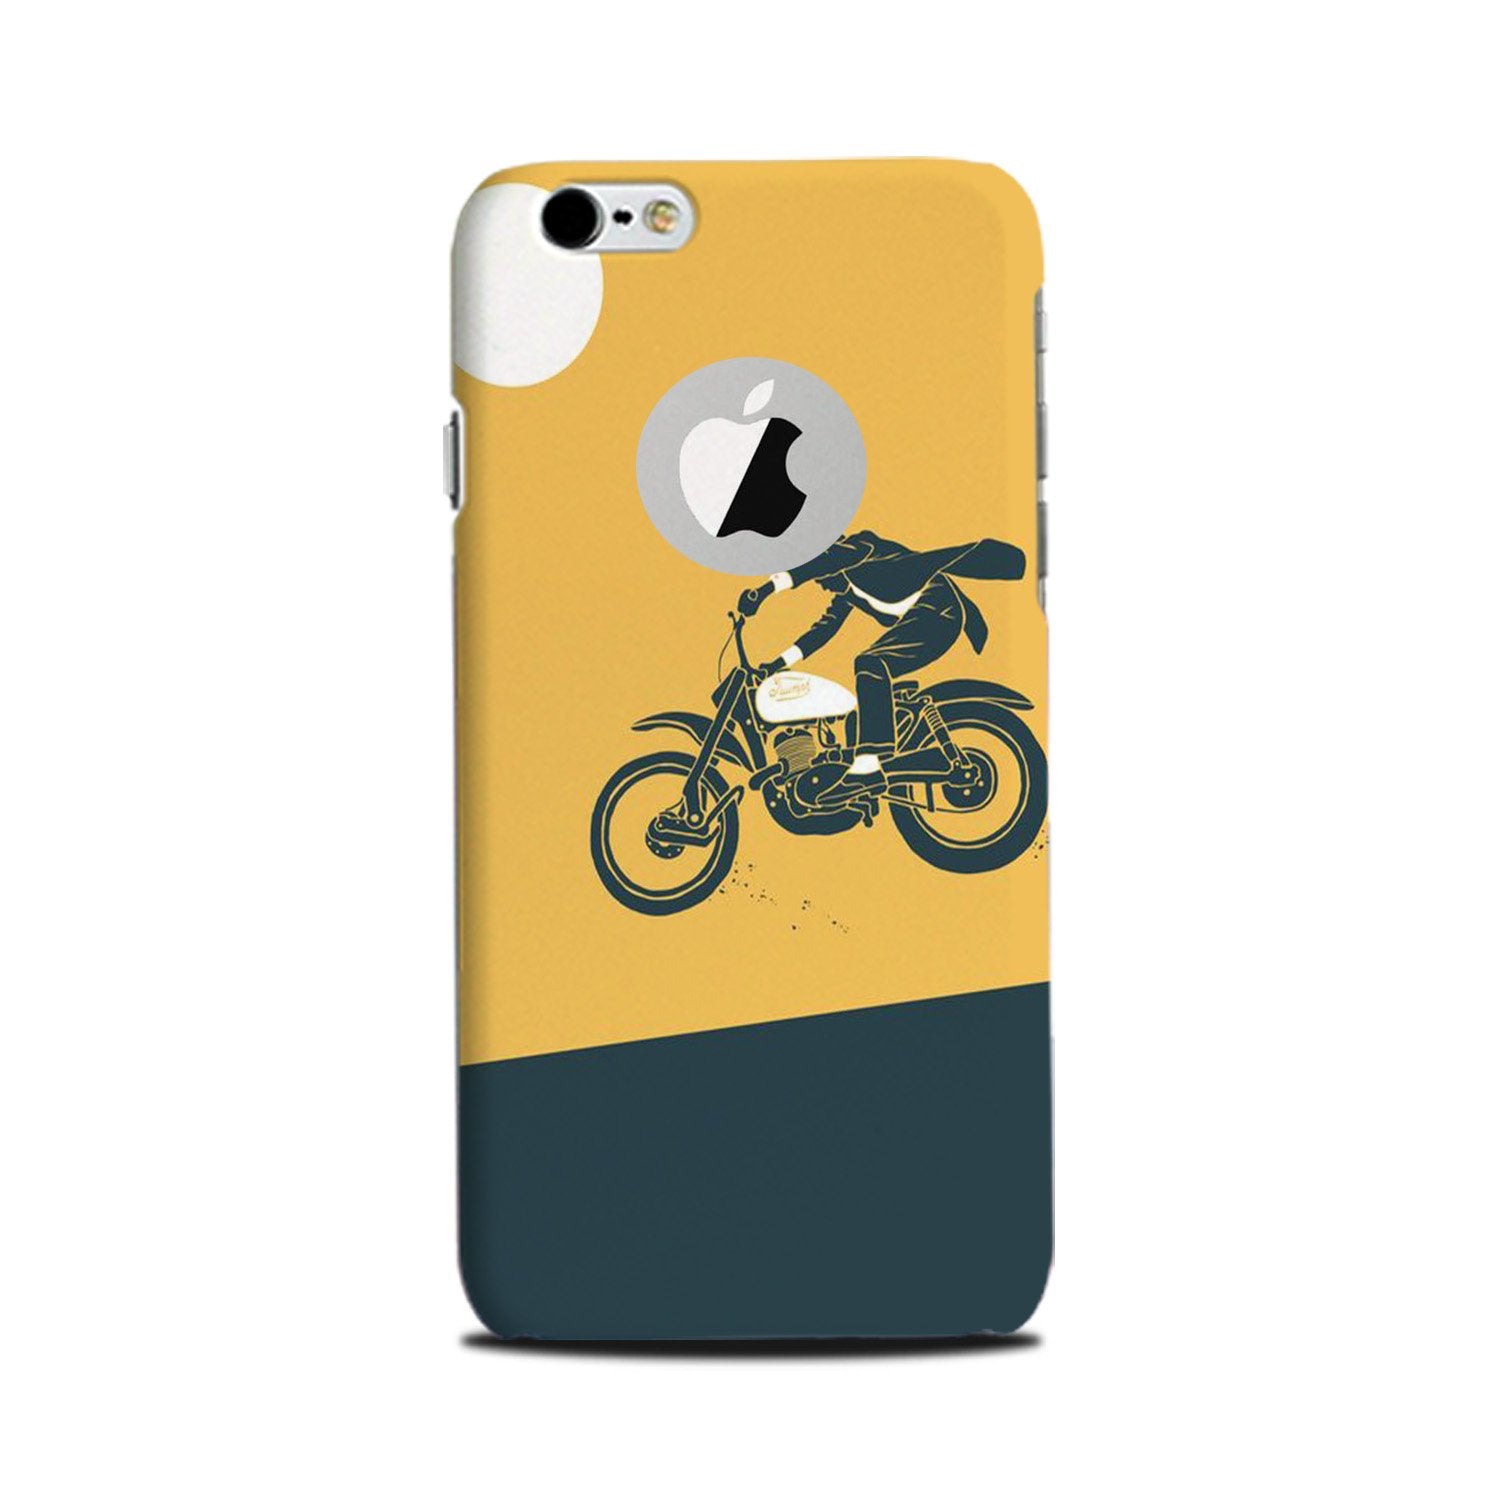 Bike Lovers Case for iPhone 6 Plus / 6s Plus logo cut(Design No. 256)